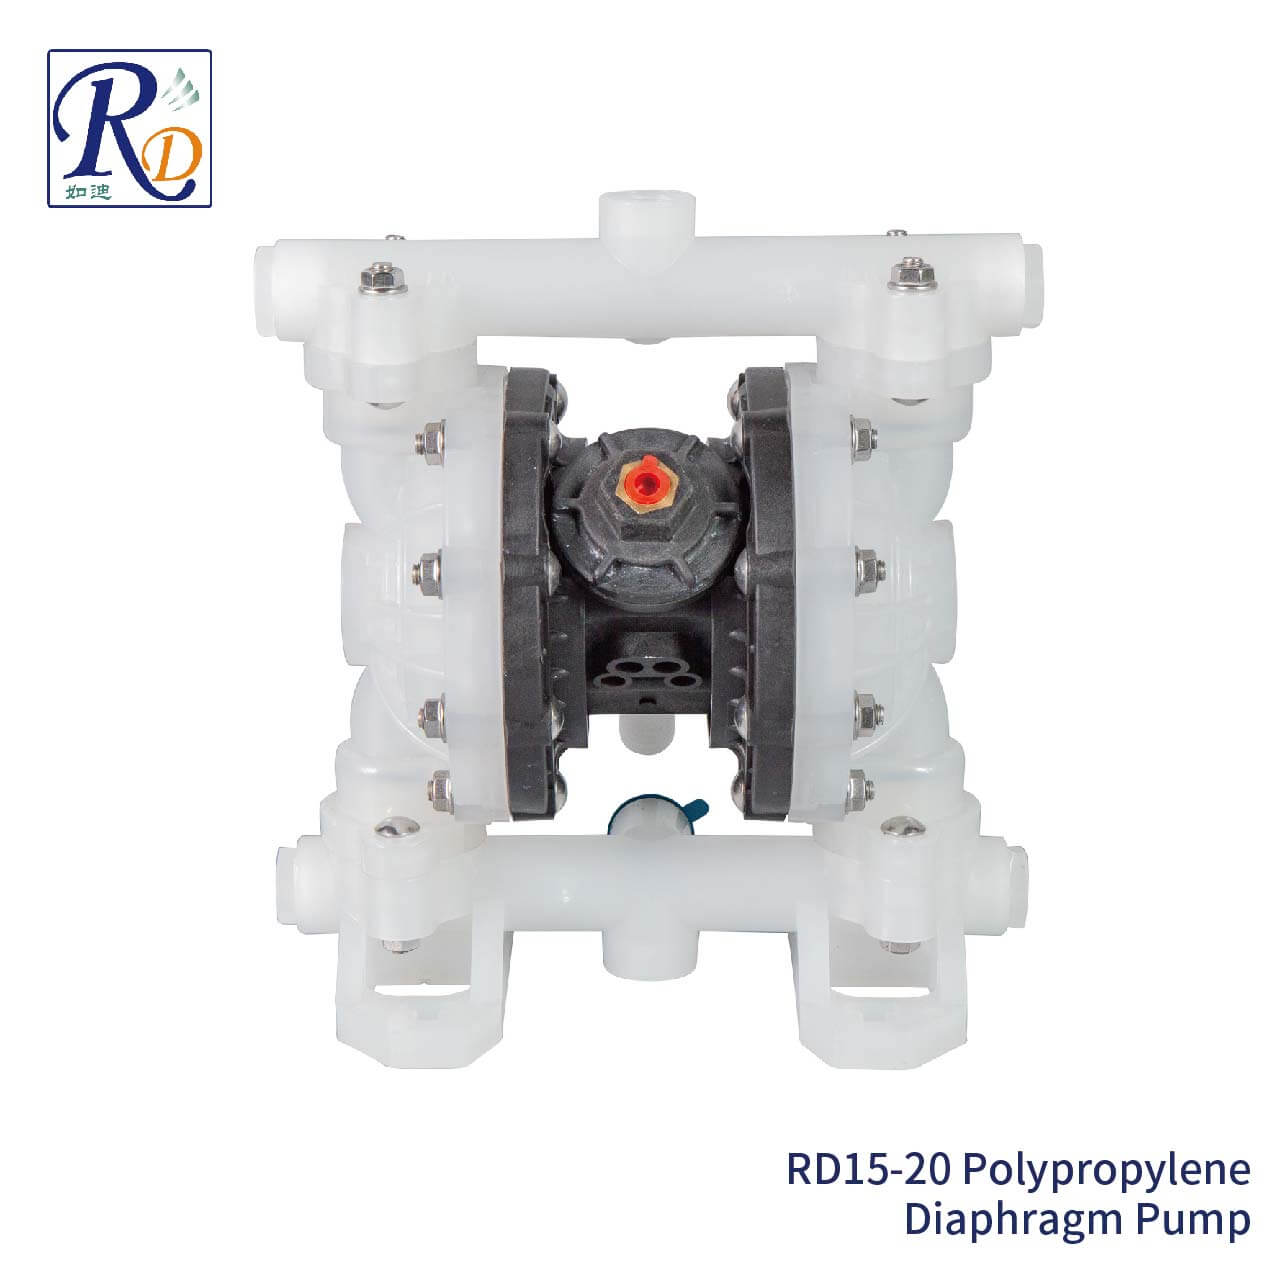 RD15-20 Polypropylene Diaphragm Pump